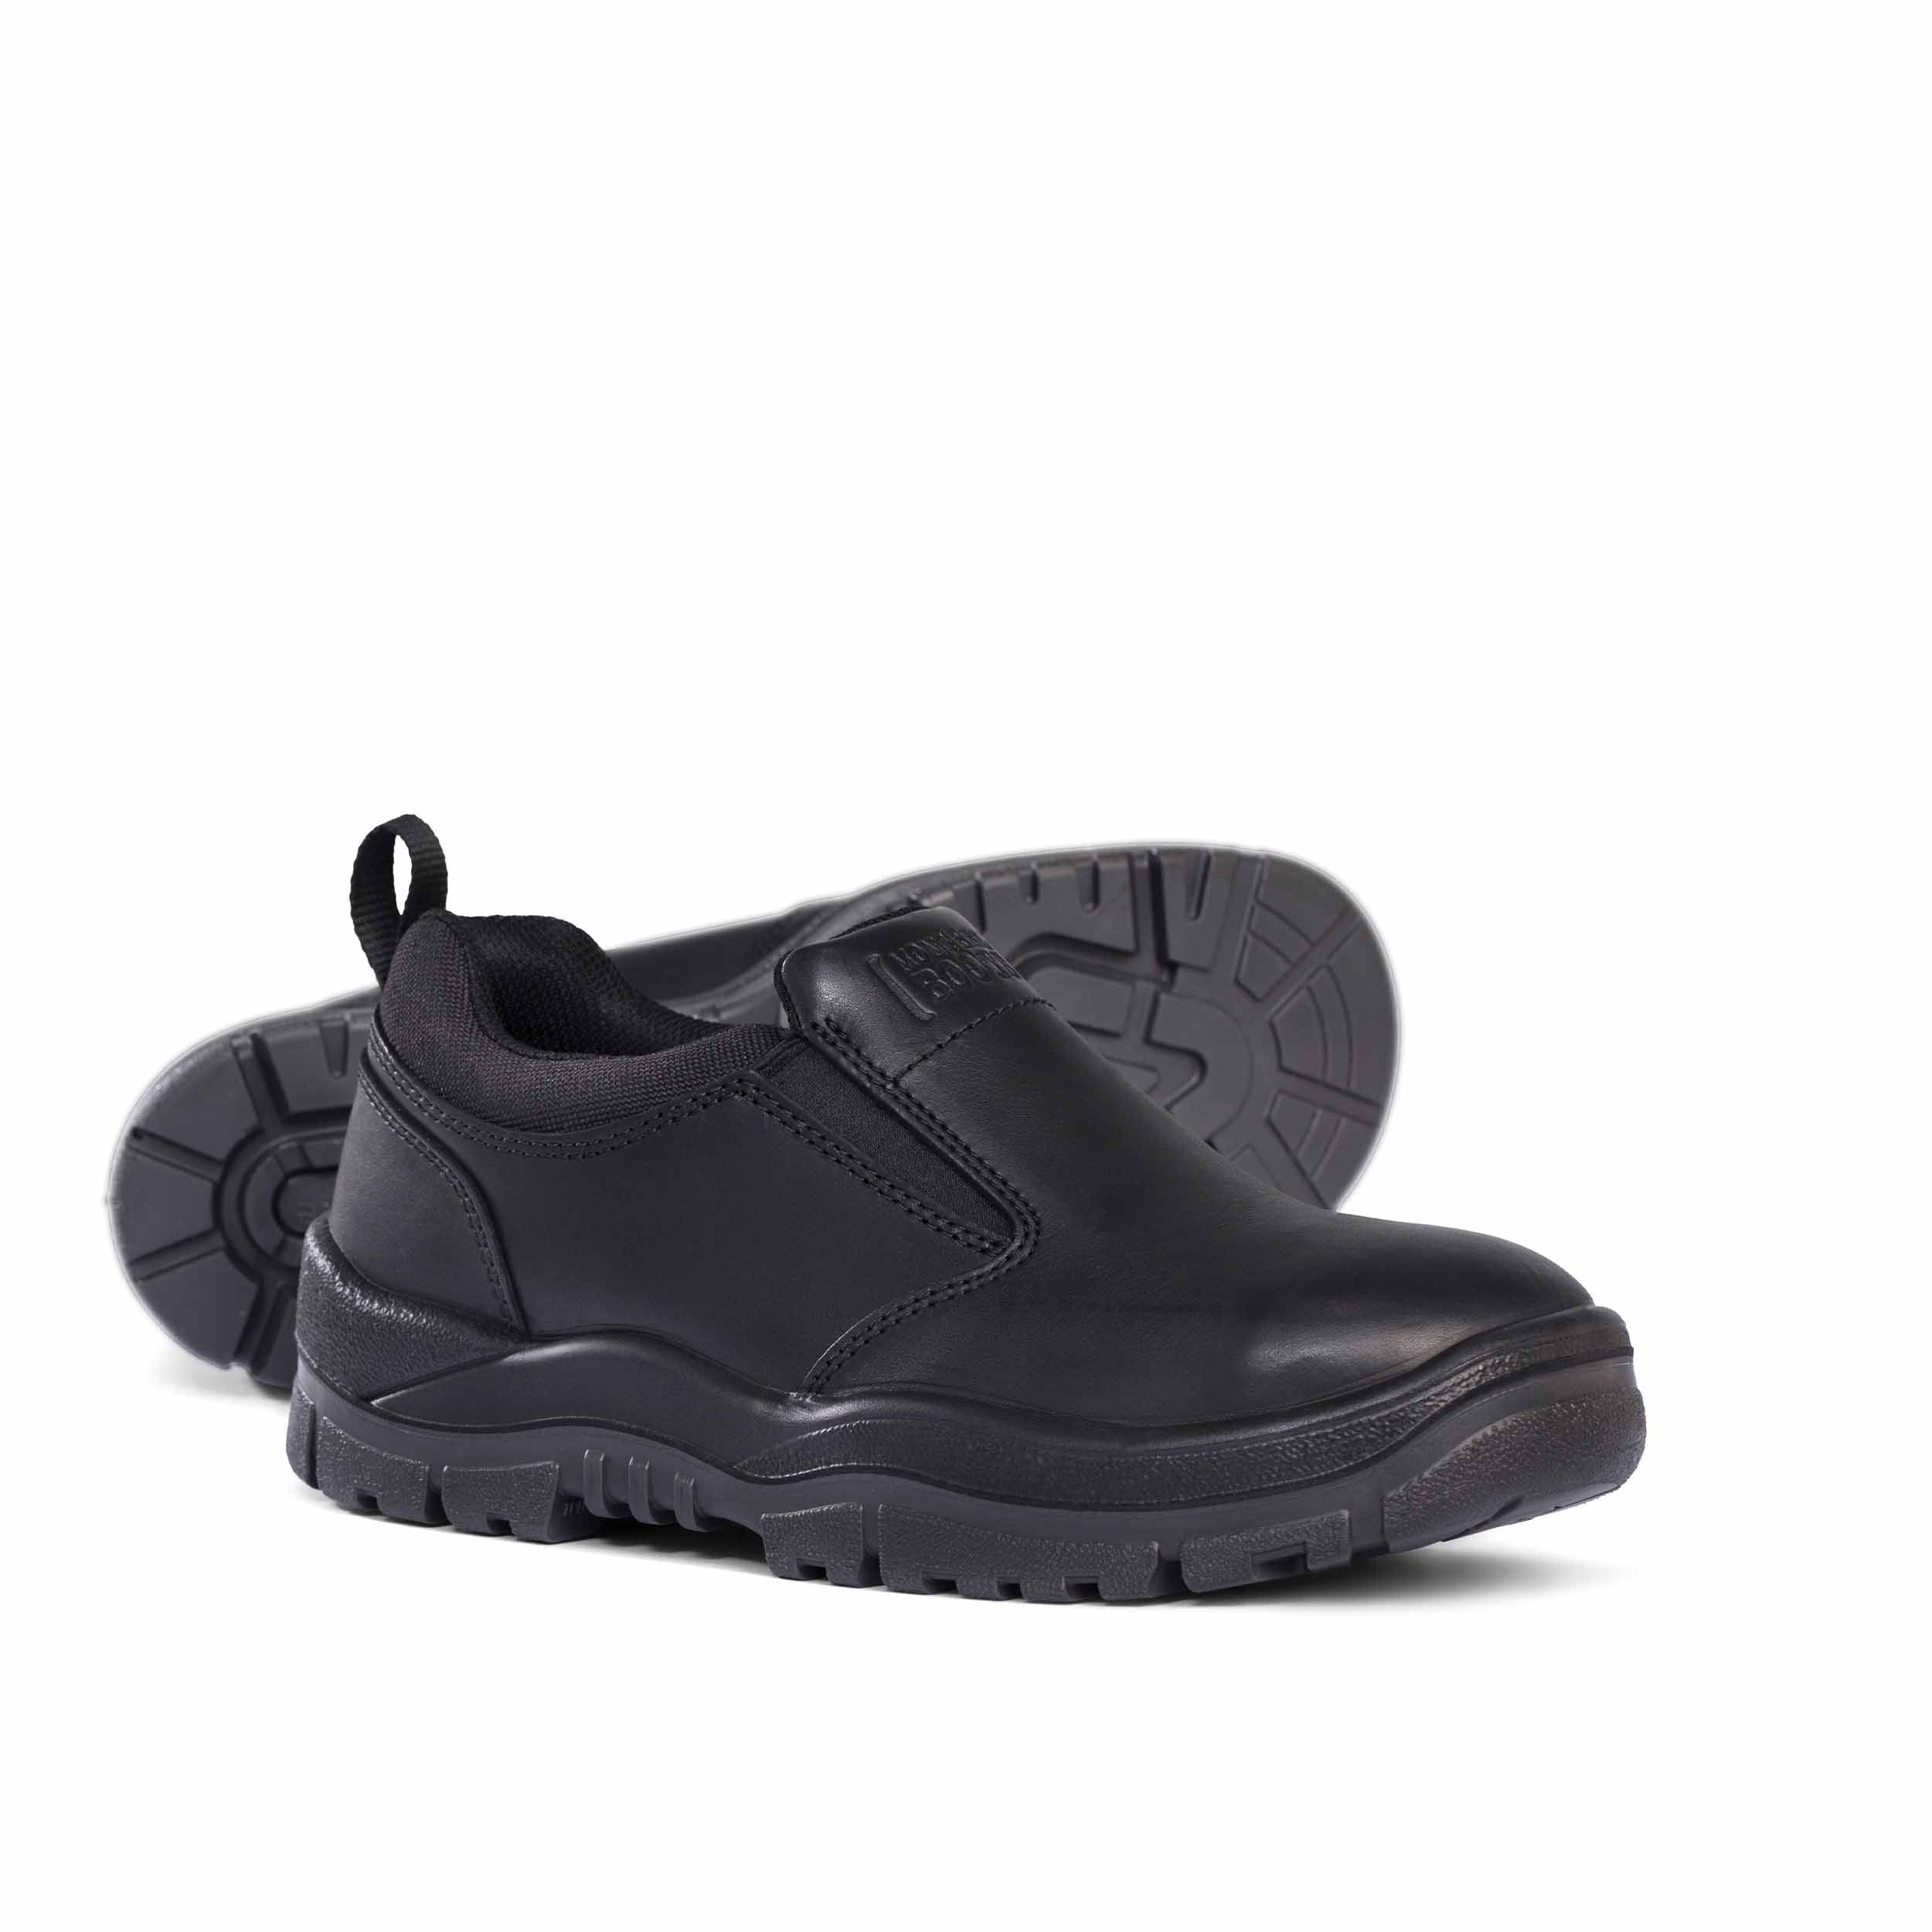 Mongrel 915025 Black Non Safety Slip On Shoe